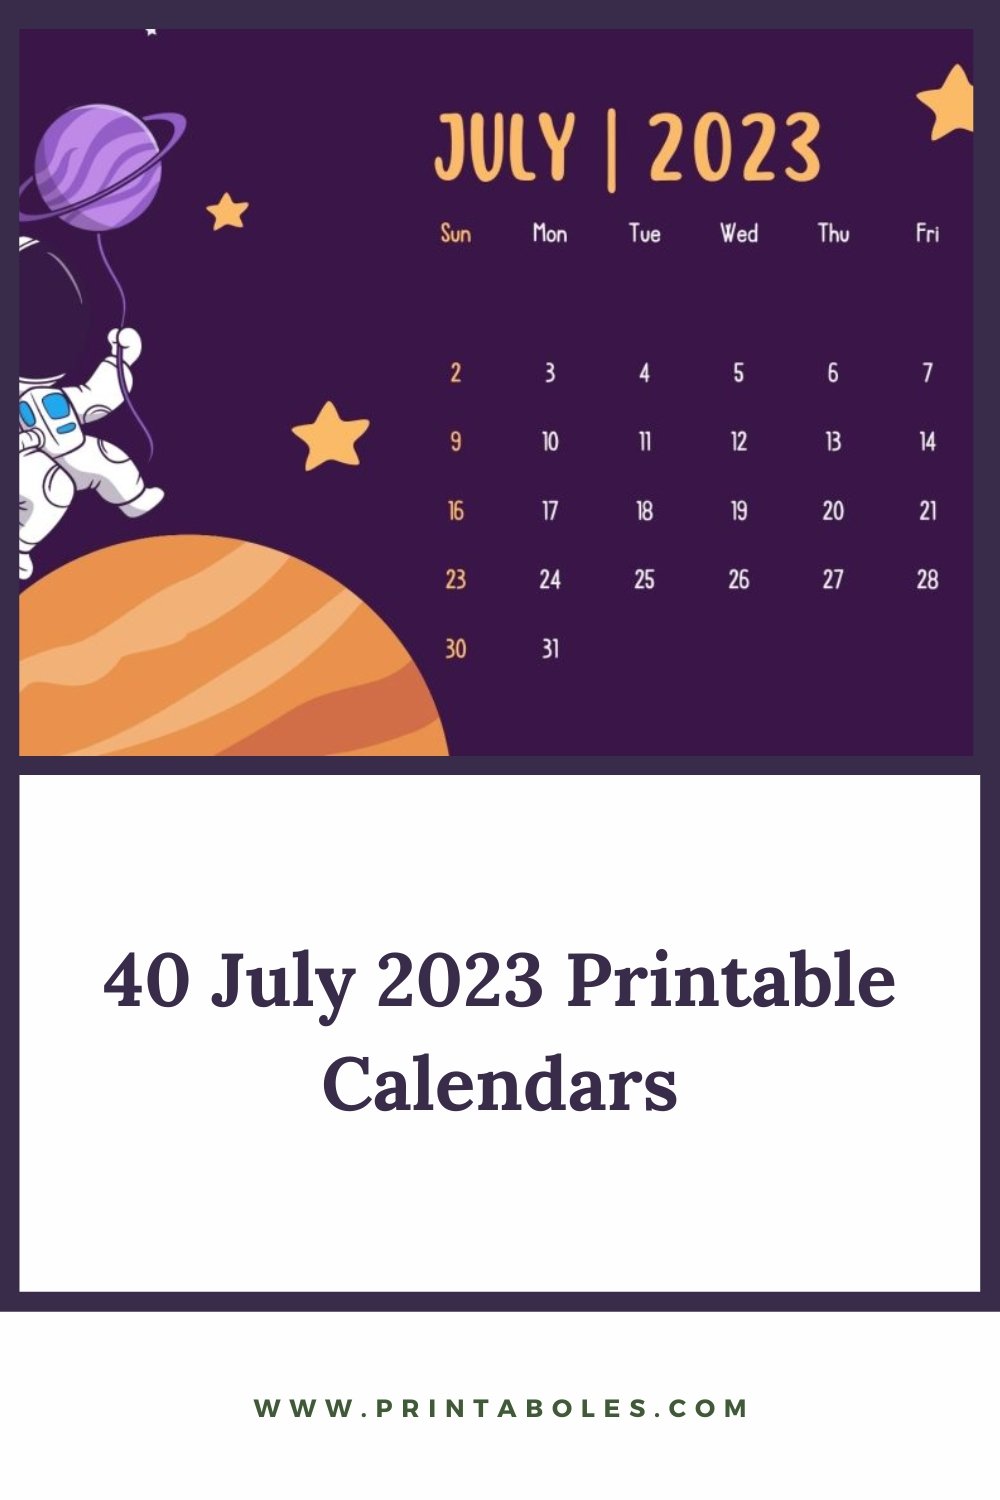 40 July 2023 Printable Calendars